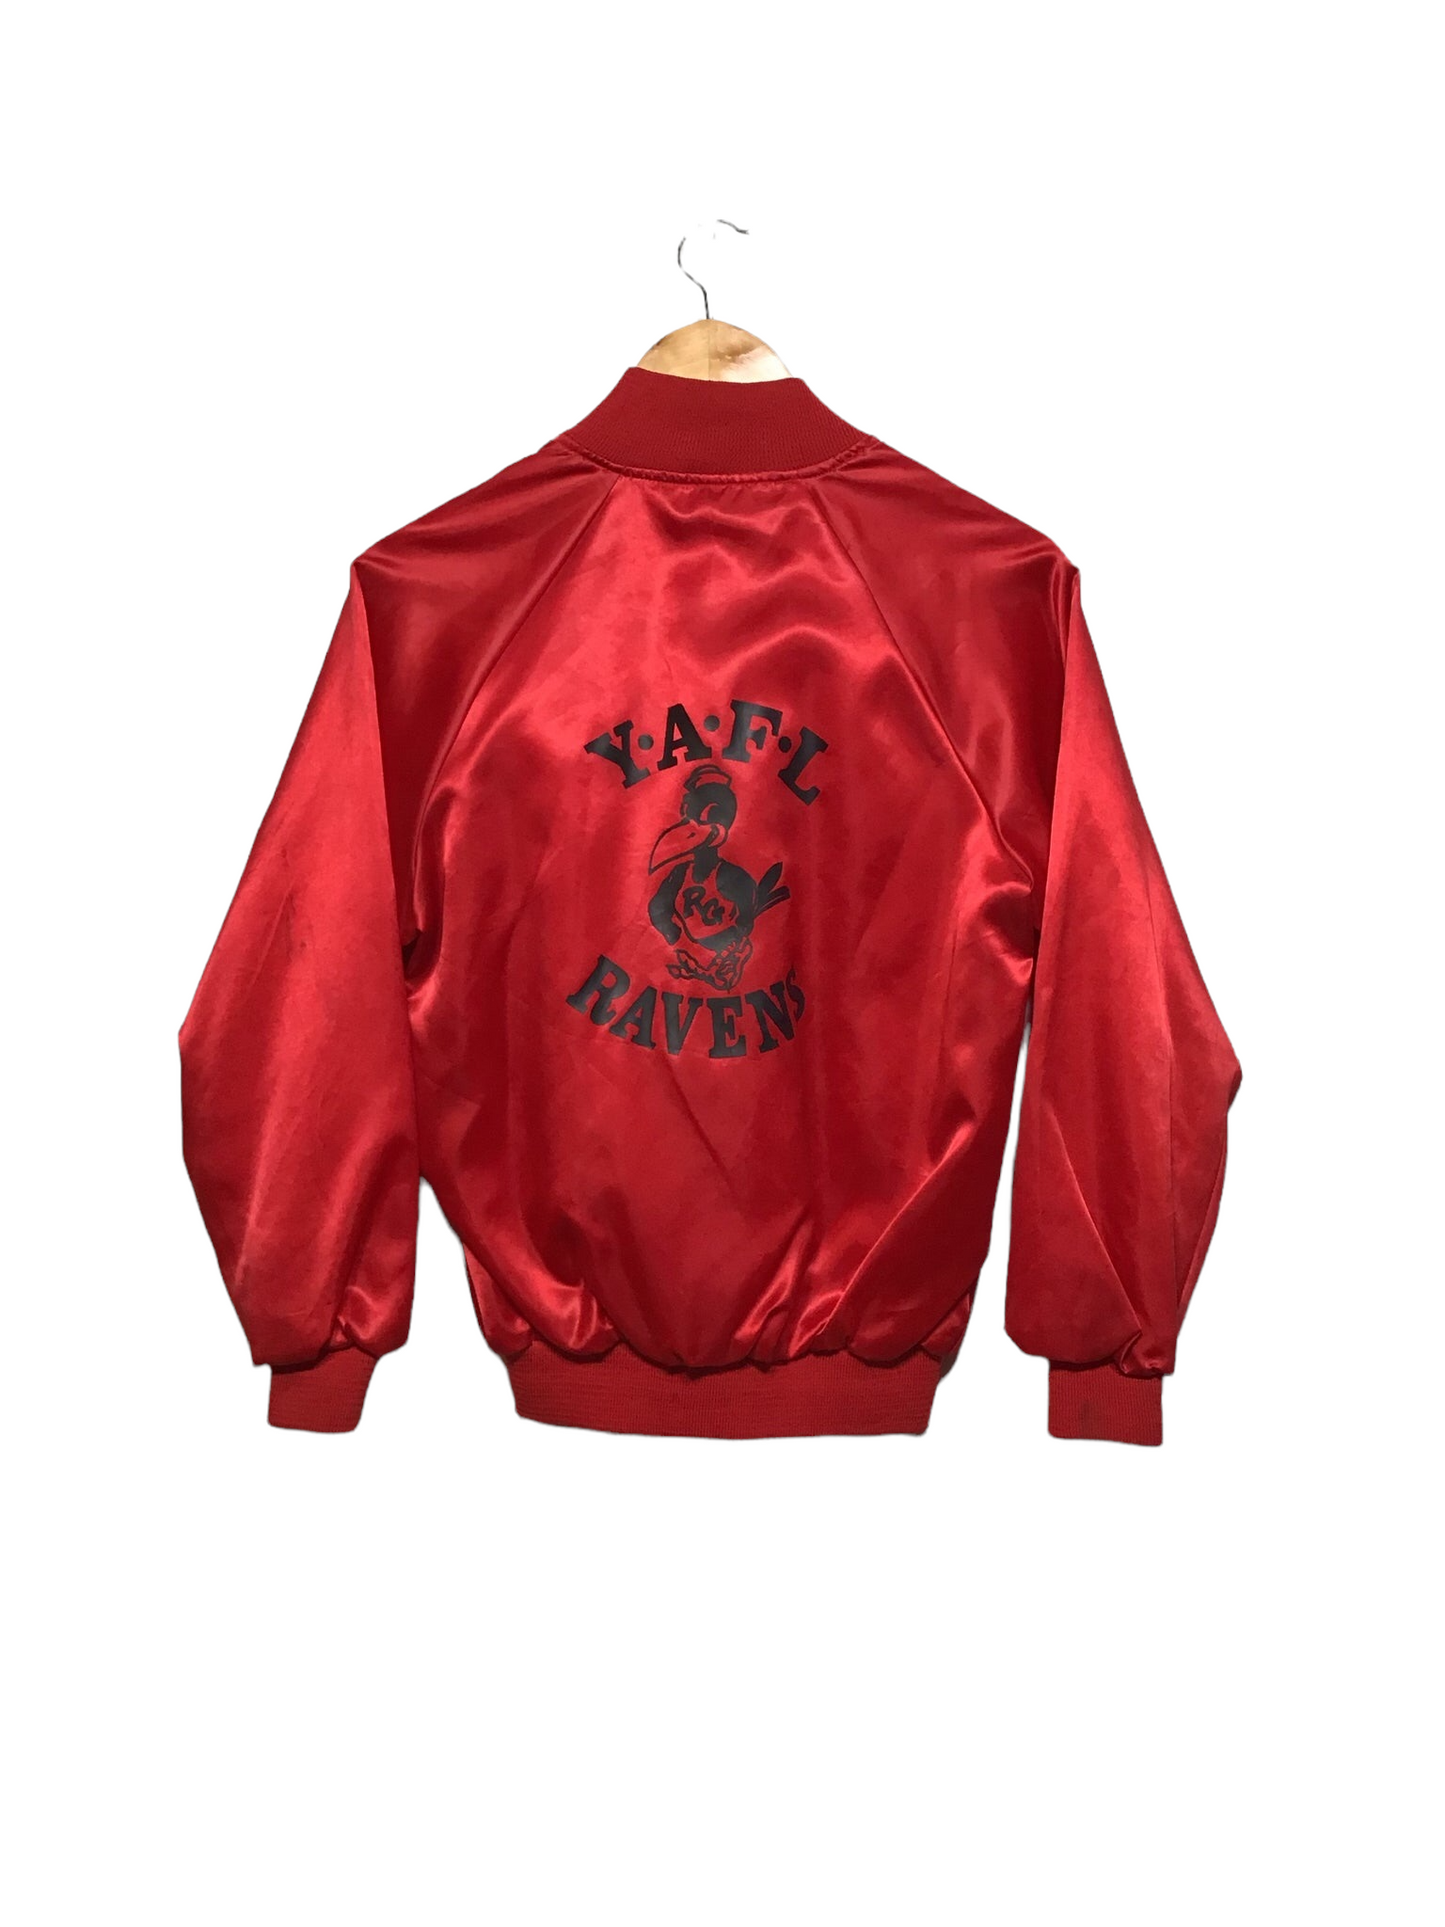 Y.A.F.L Ravens Varsity Jacket (Size S)